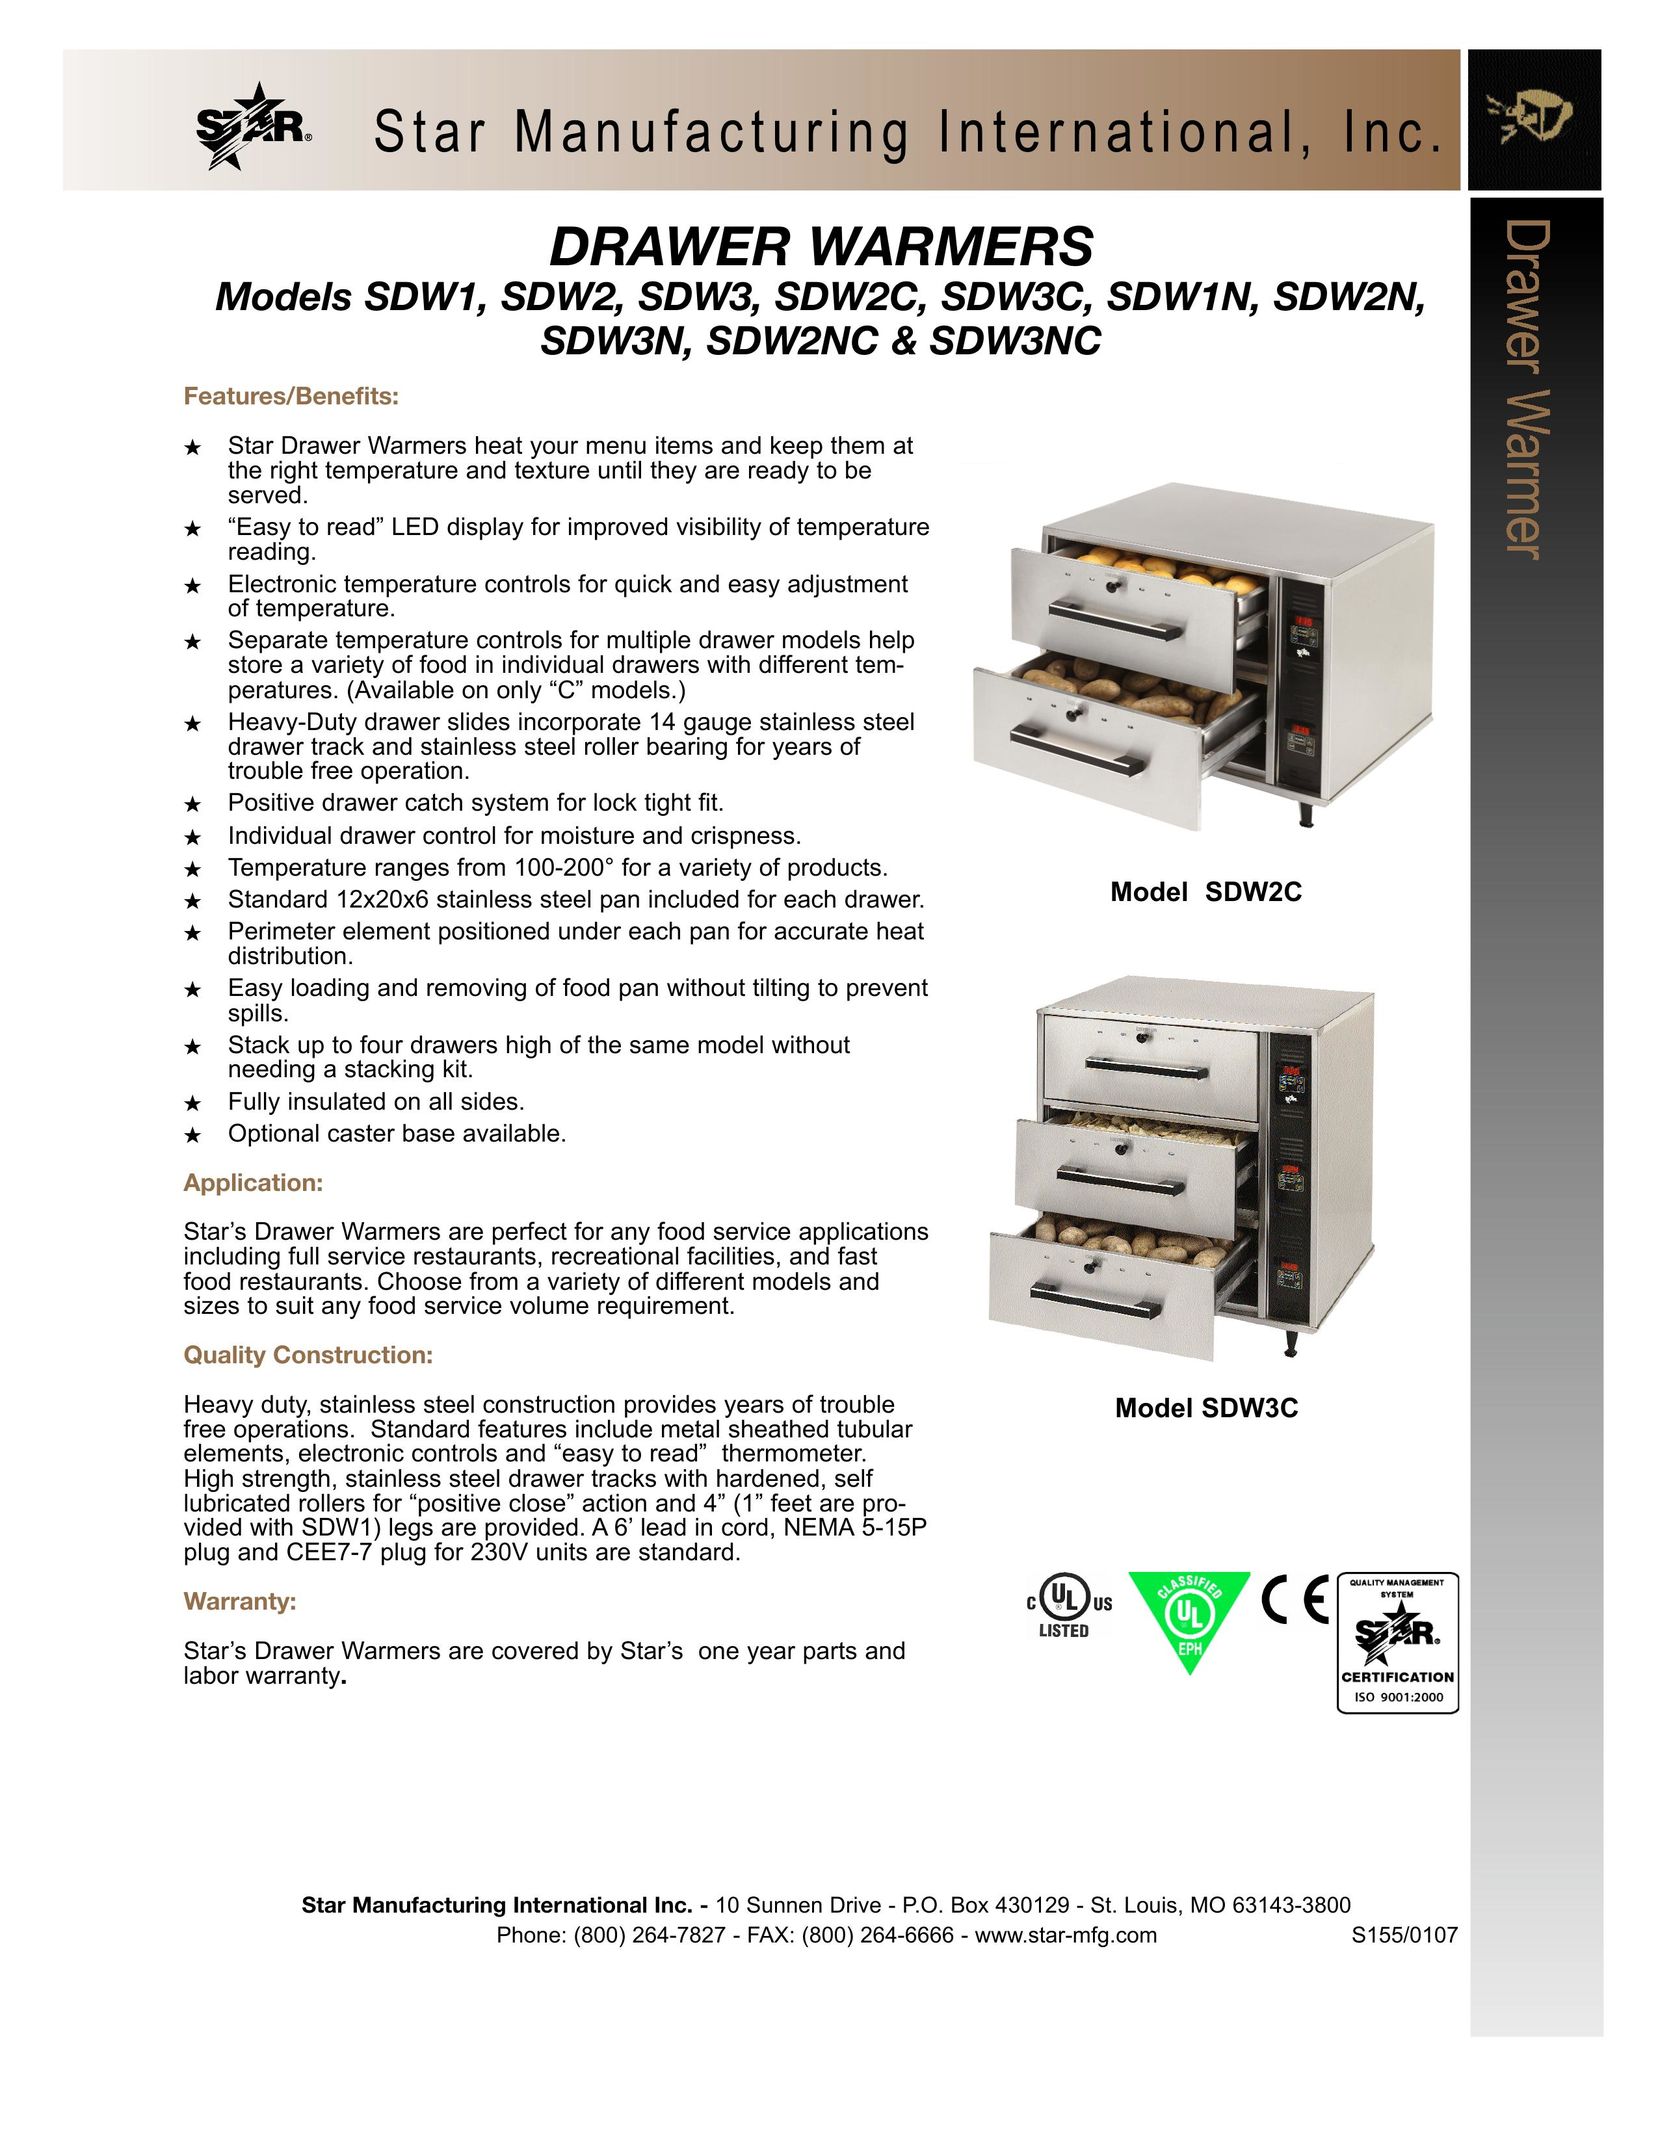 Star Manufacturing SDW3NC Food Warmer User Manual